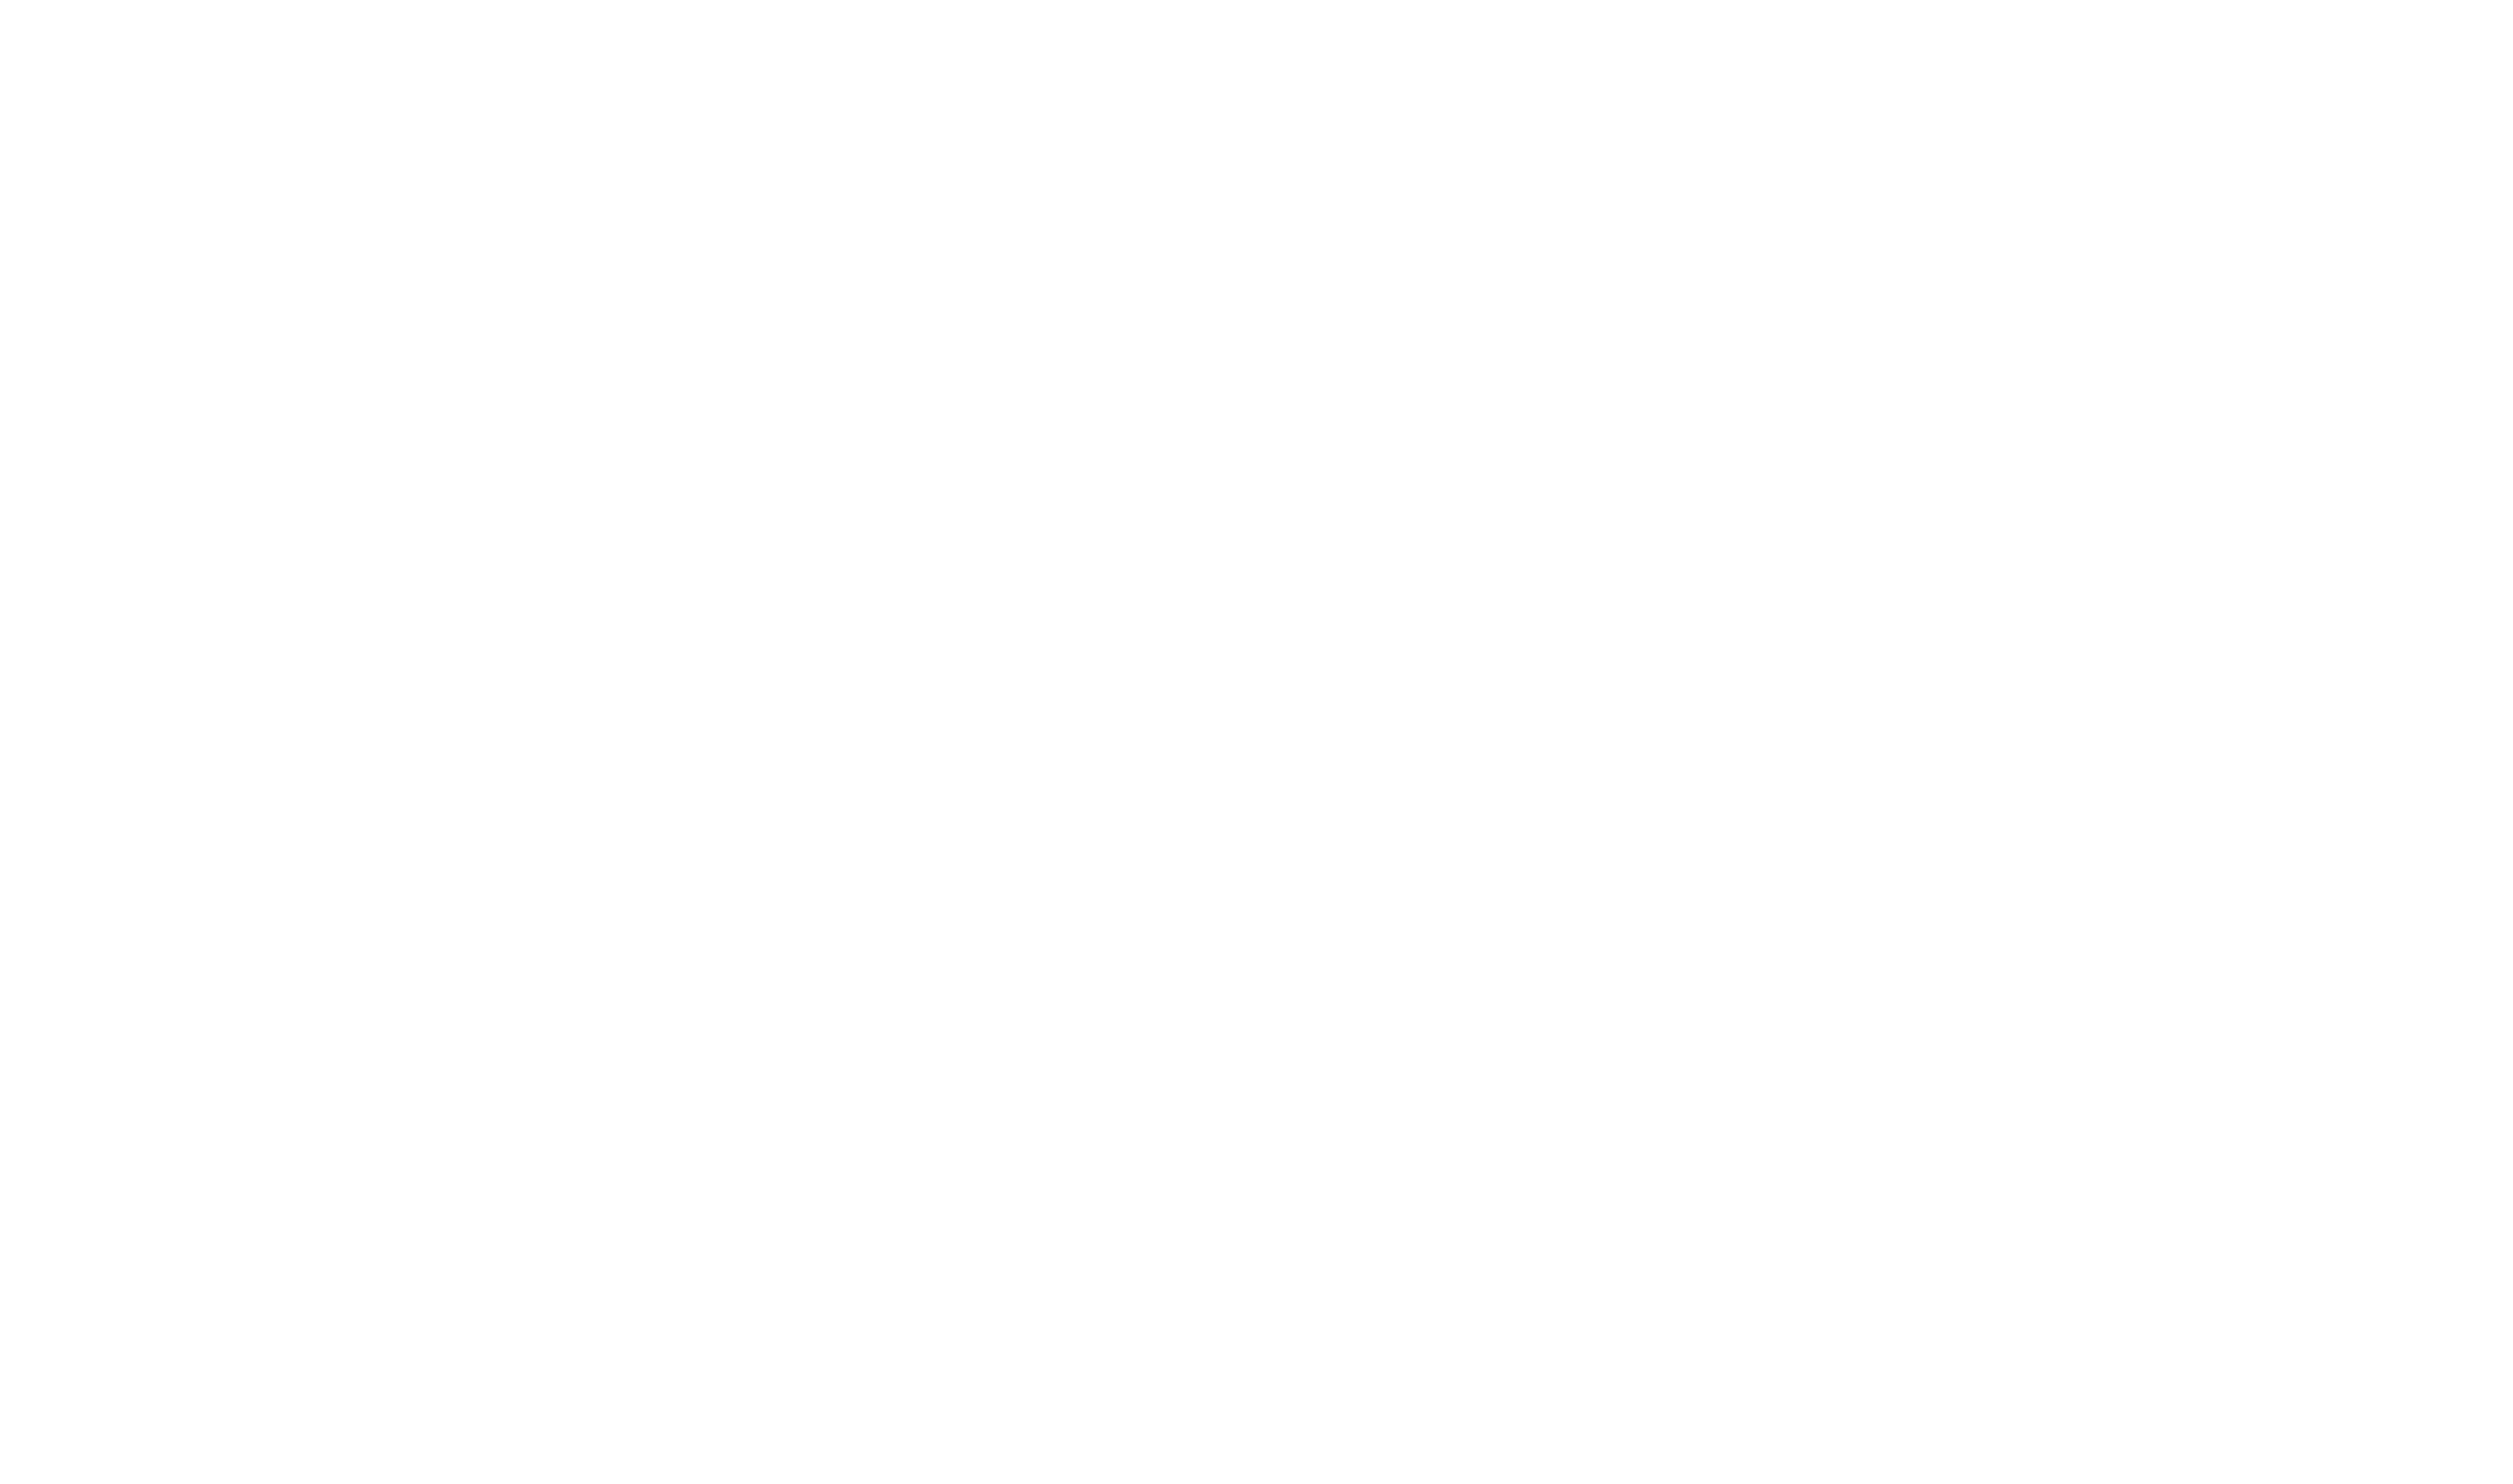 Jogos Plants vs Zombies – Site Oficial da EA